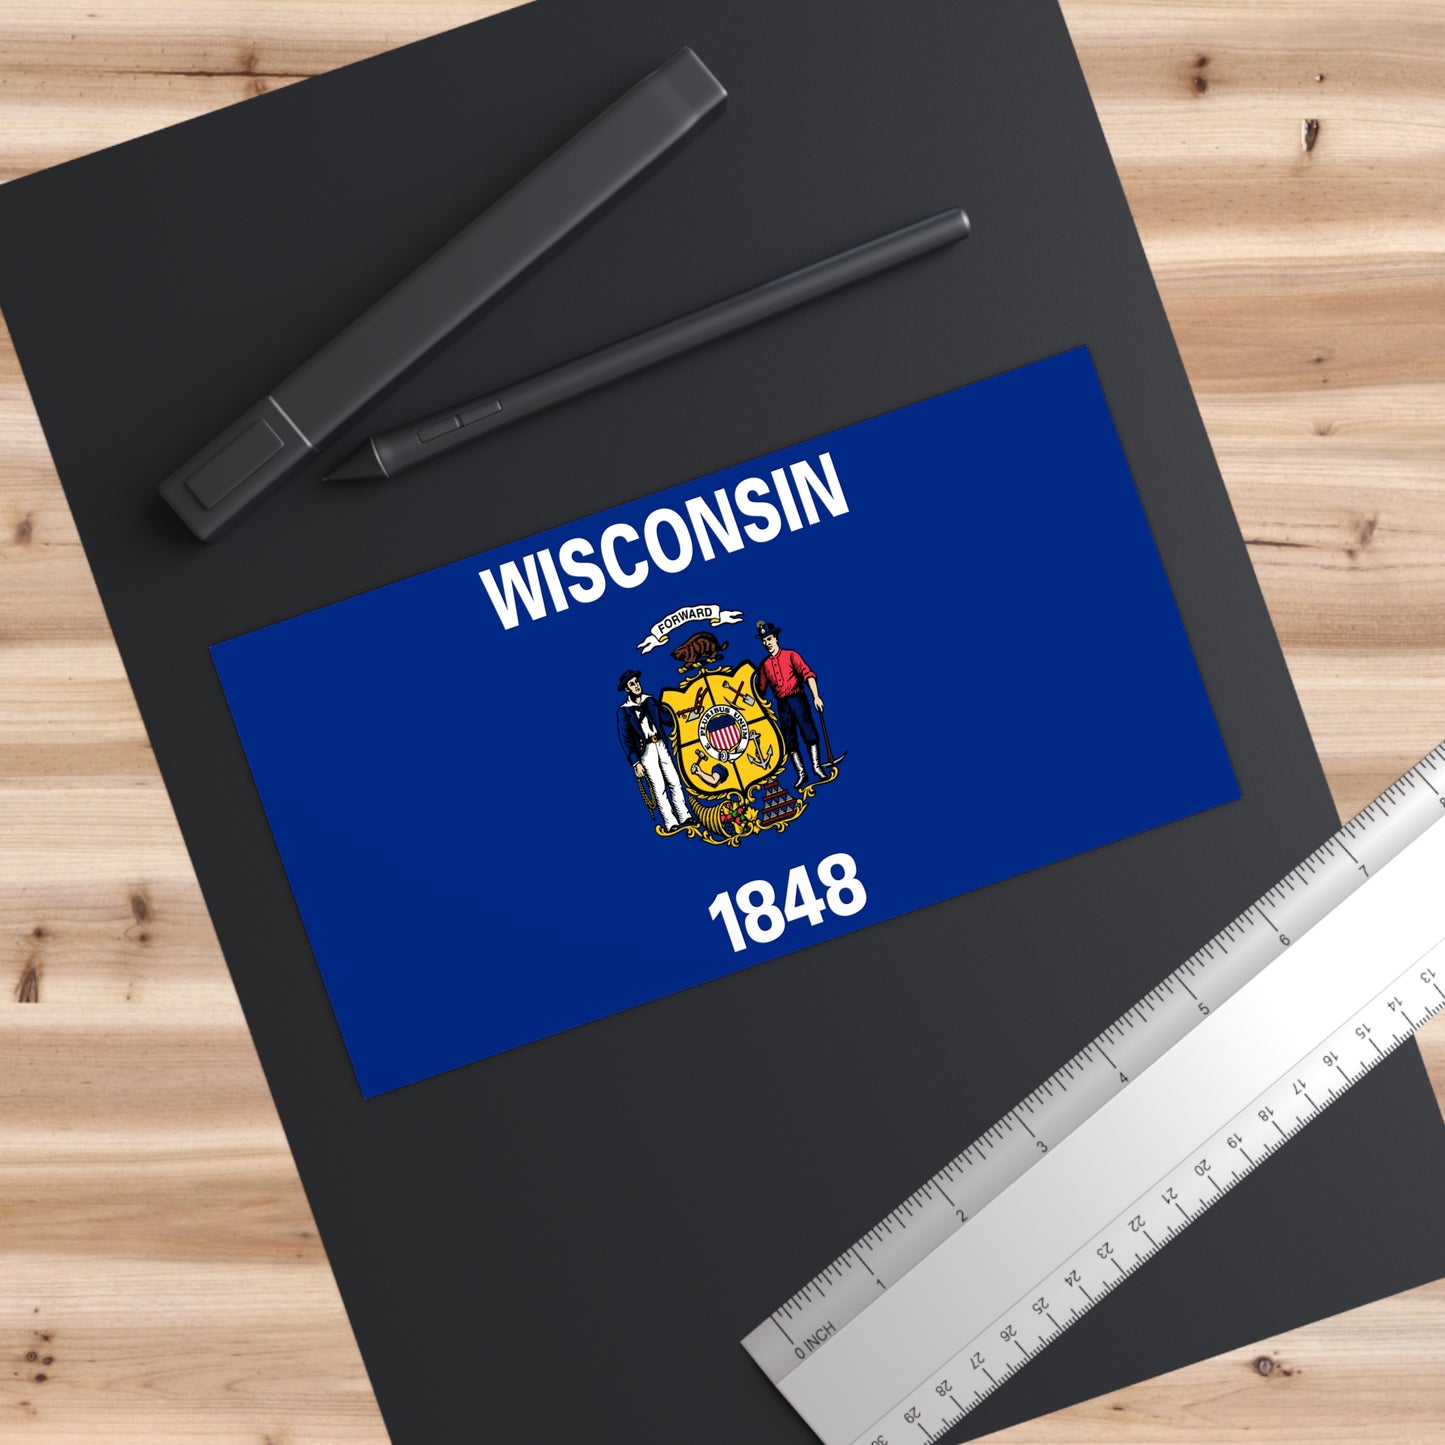 Wisconsin Flag Bumper Stickers